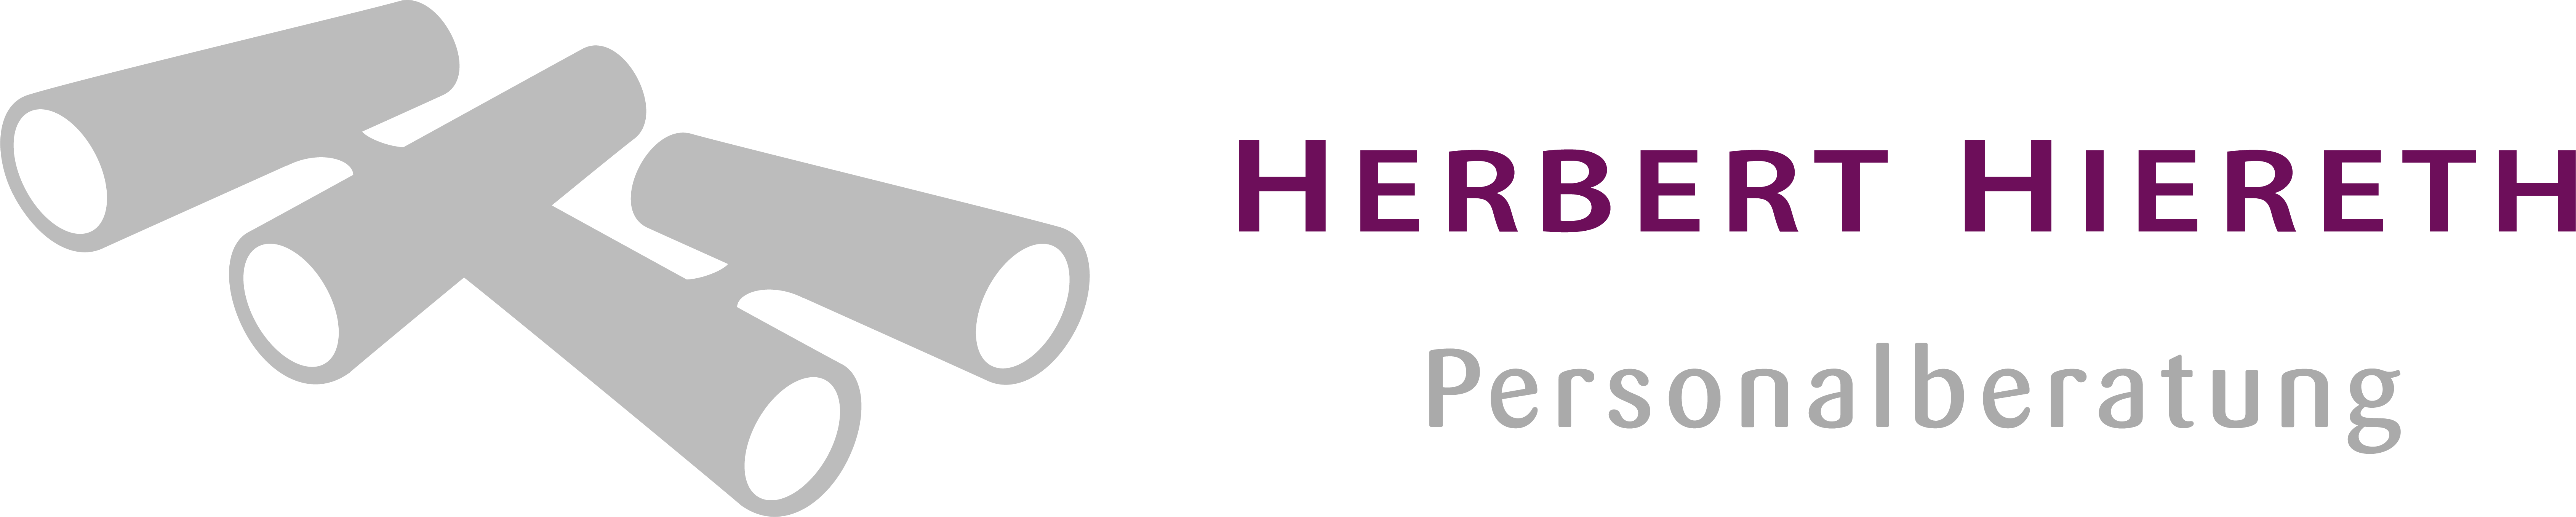 Herbert Hiereth Logo